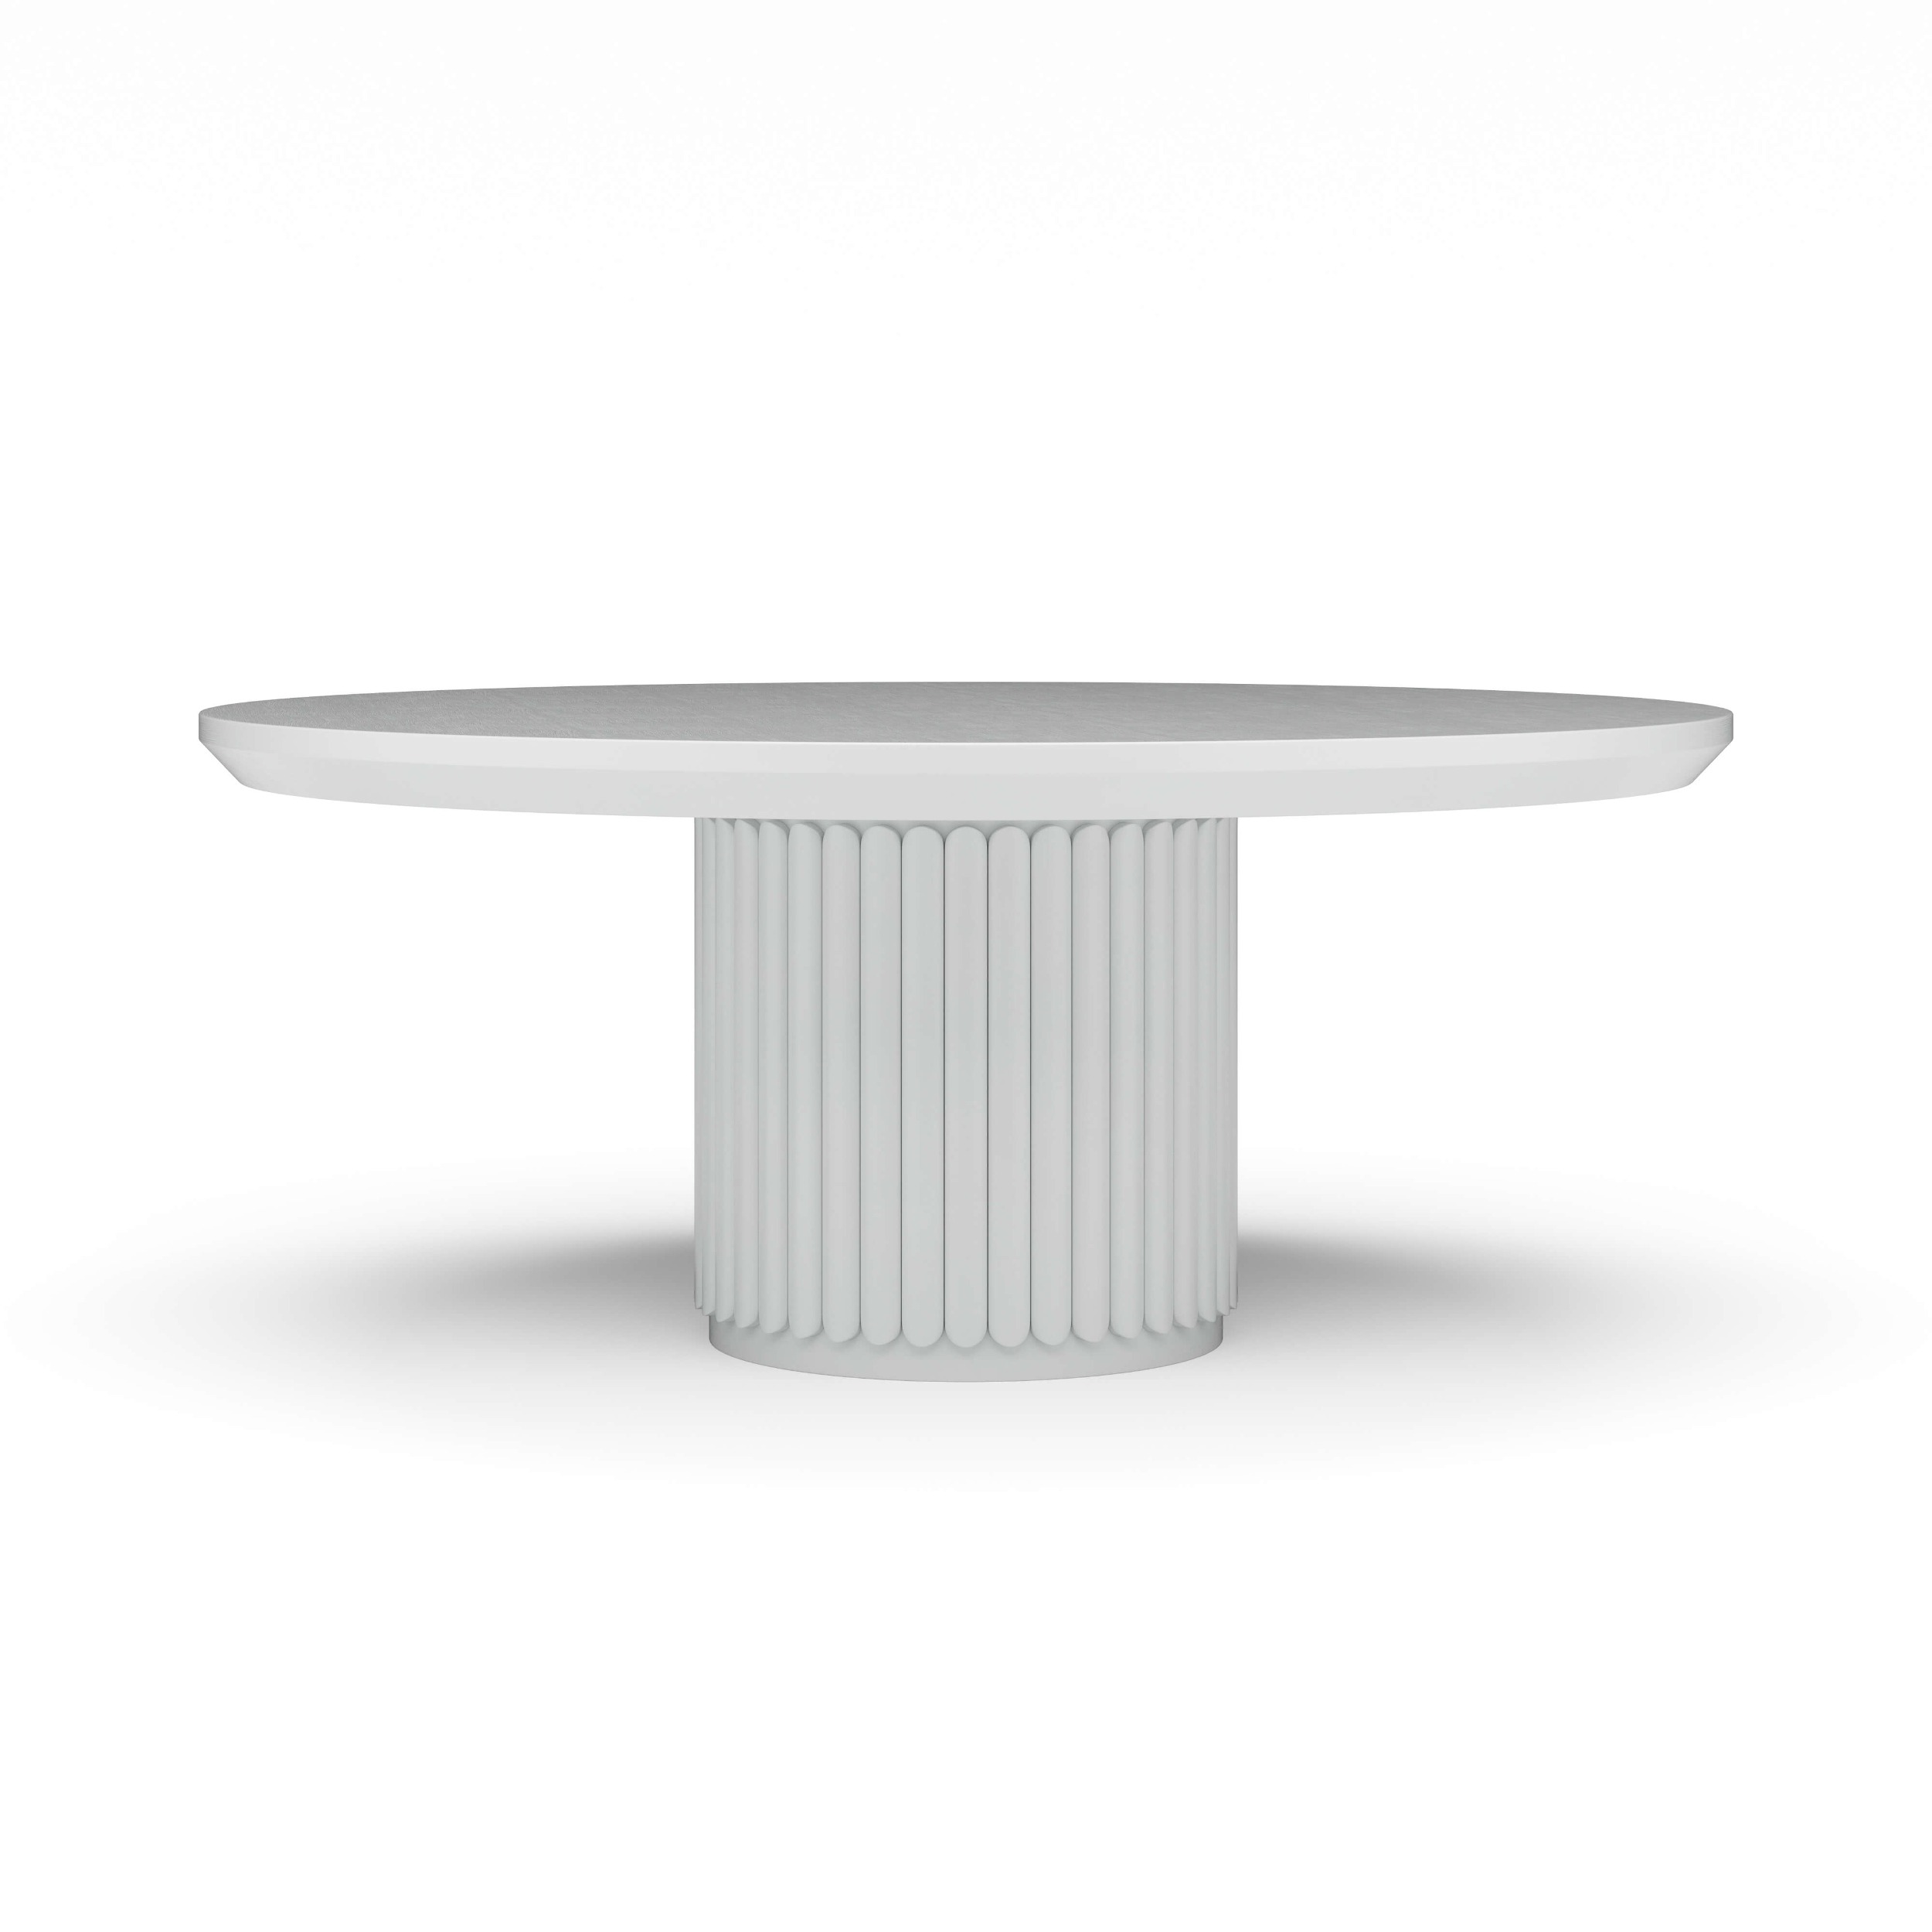 Portobello Round Pedestal Farm Dining Table, Made in the USA